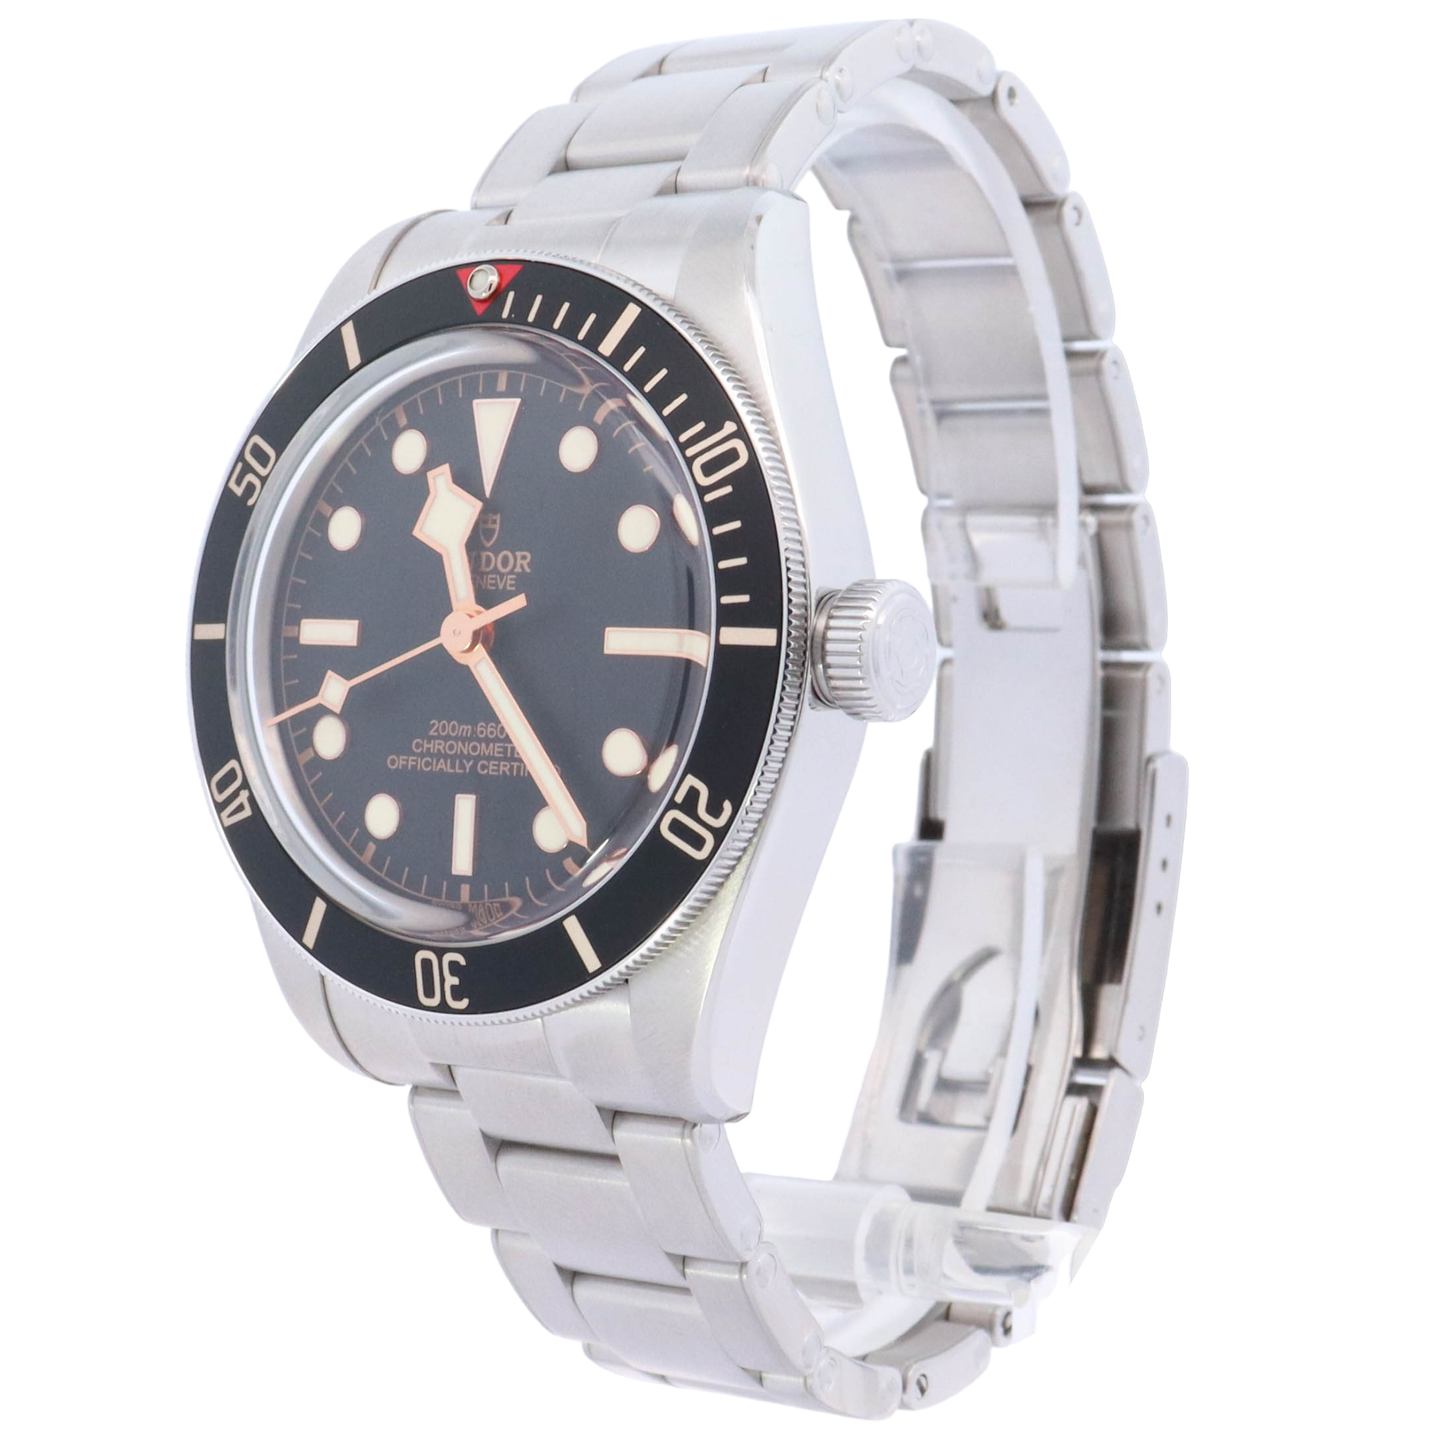 Tudor Black Bay 58 Stainless Steel 39mm Black Dot Dial Watch Reference #: 79030N - Happy Jewelers Fine Jewelry Lifetime Warranty